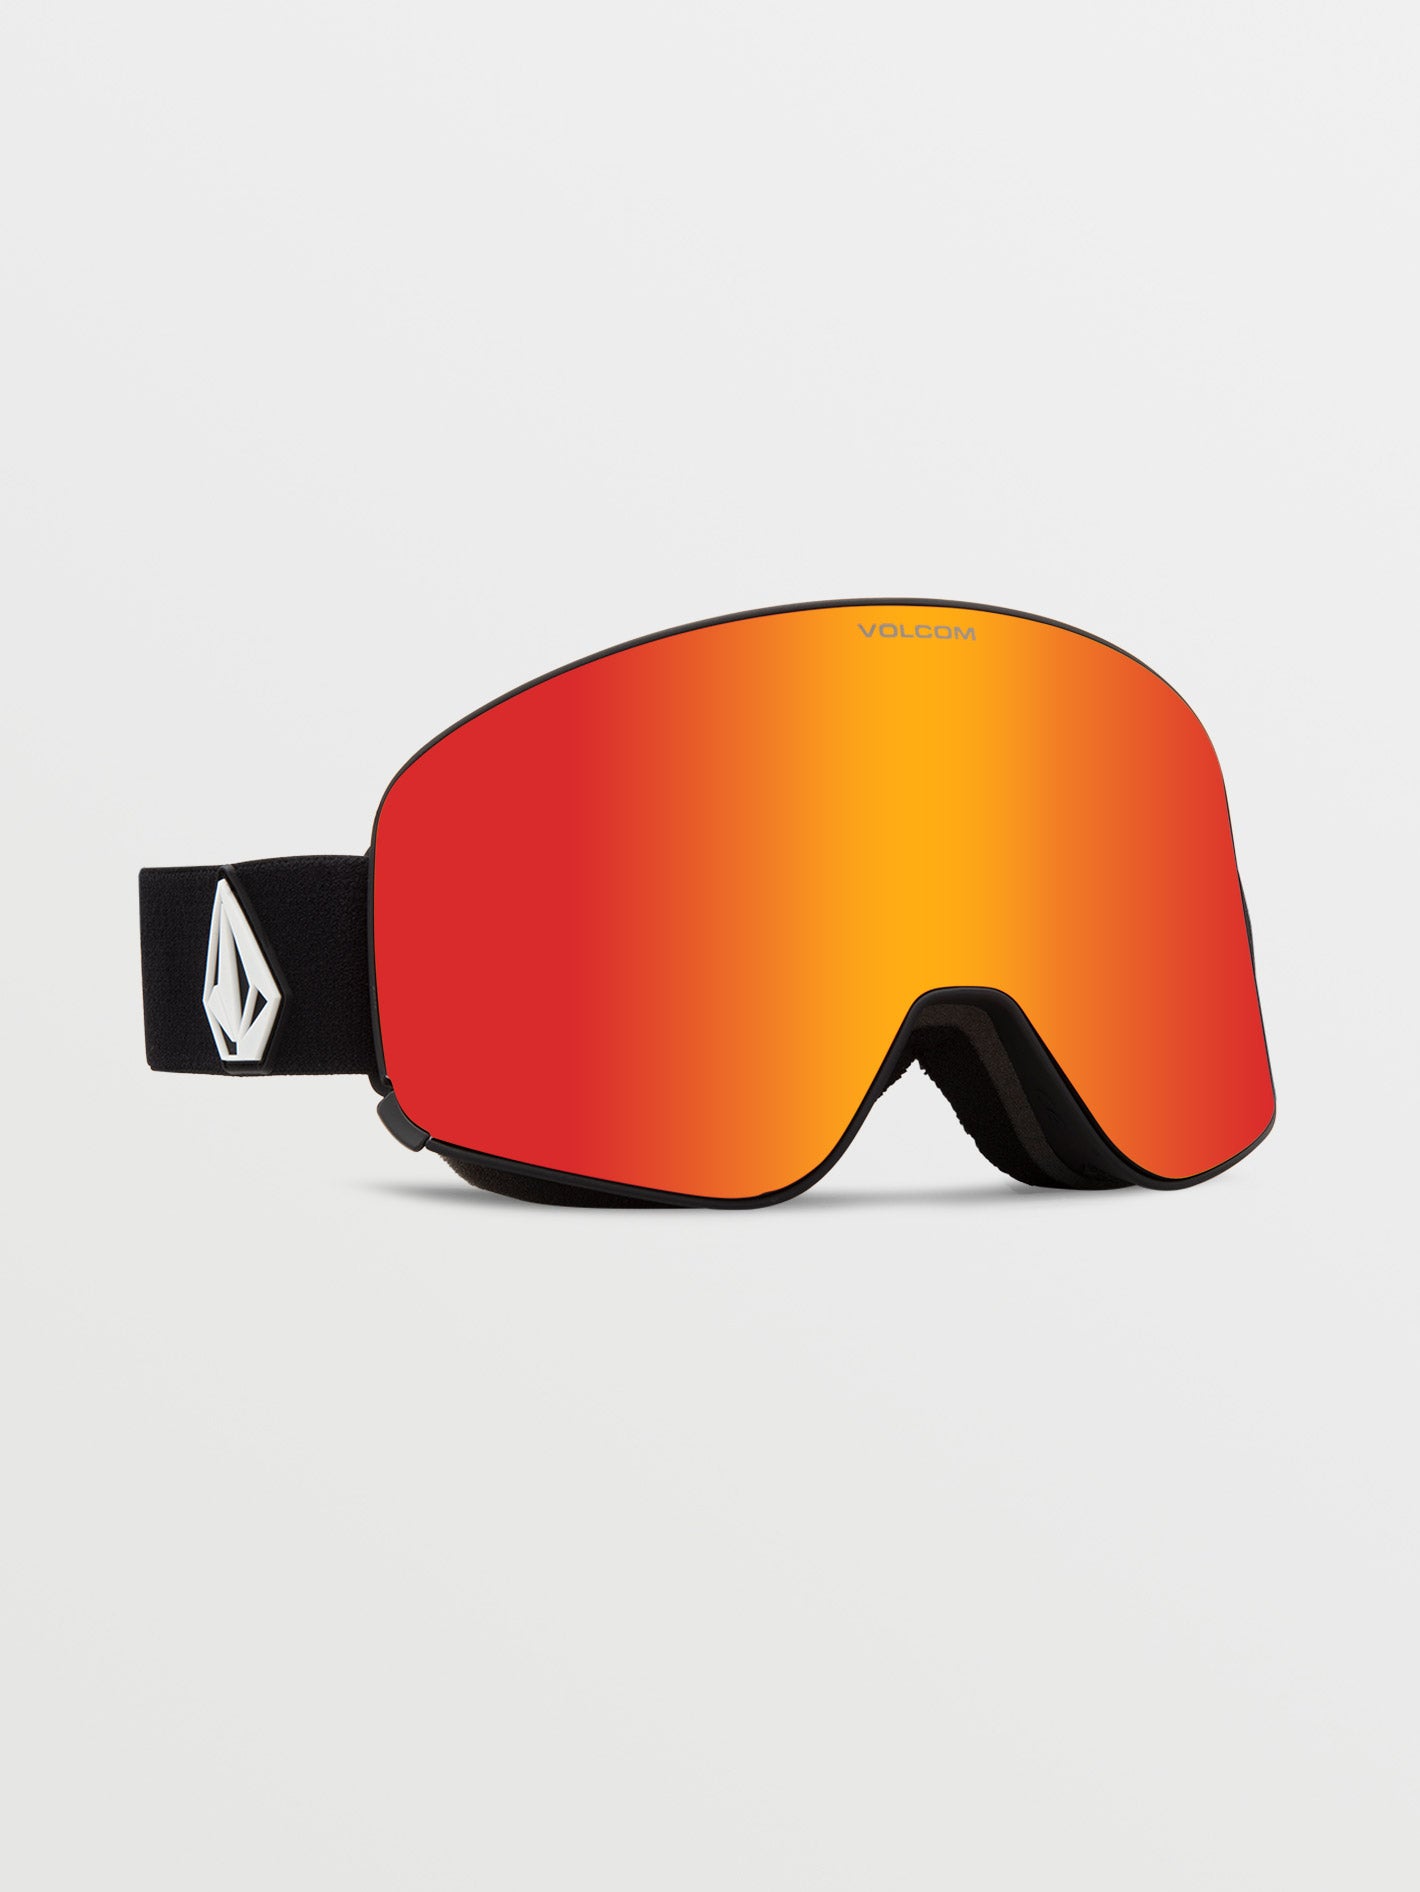 Volcom Odyssey Goggles - Matte Black/Red Chrome+Yellow